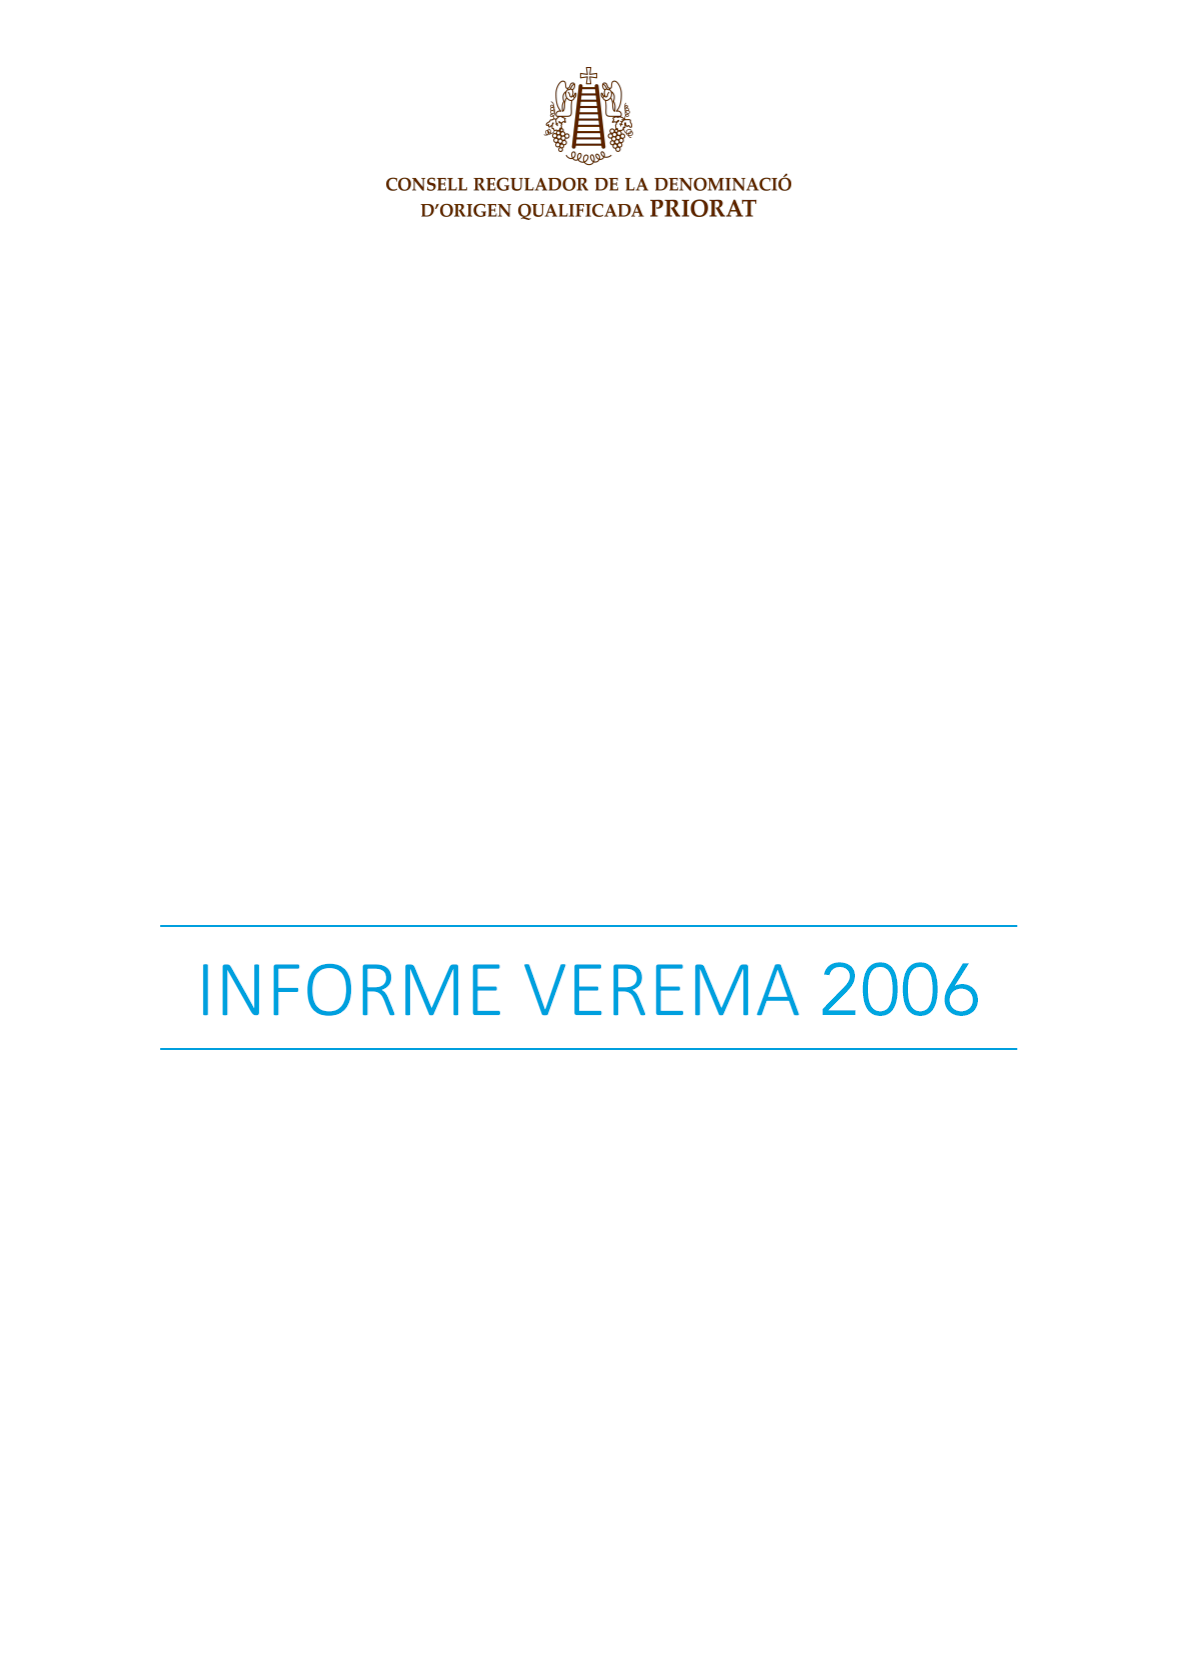 Informe de verema 2006